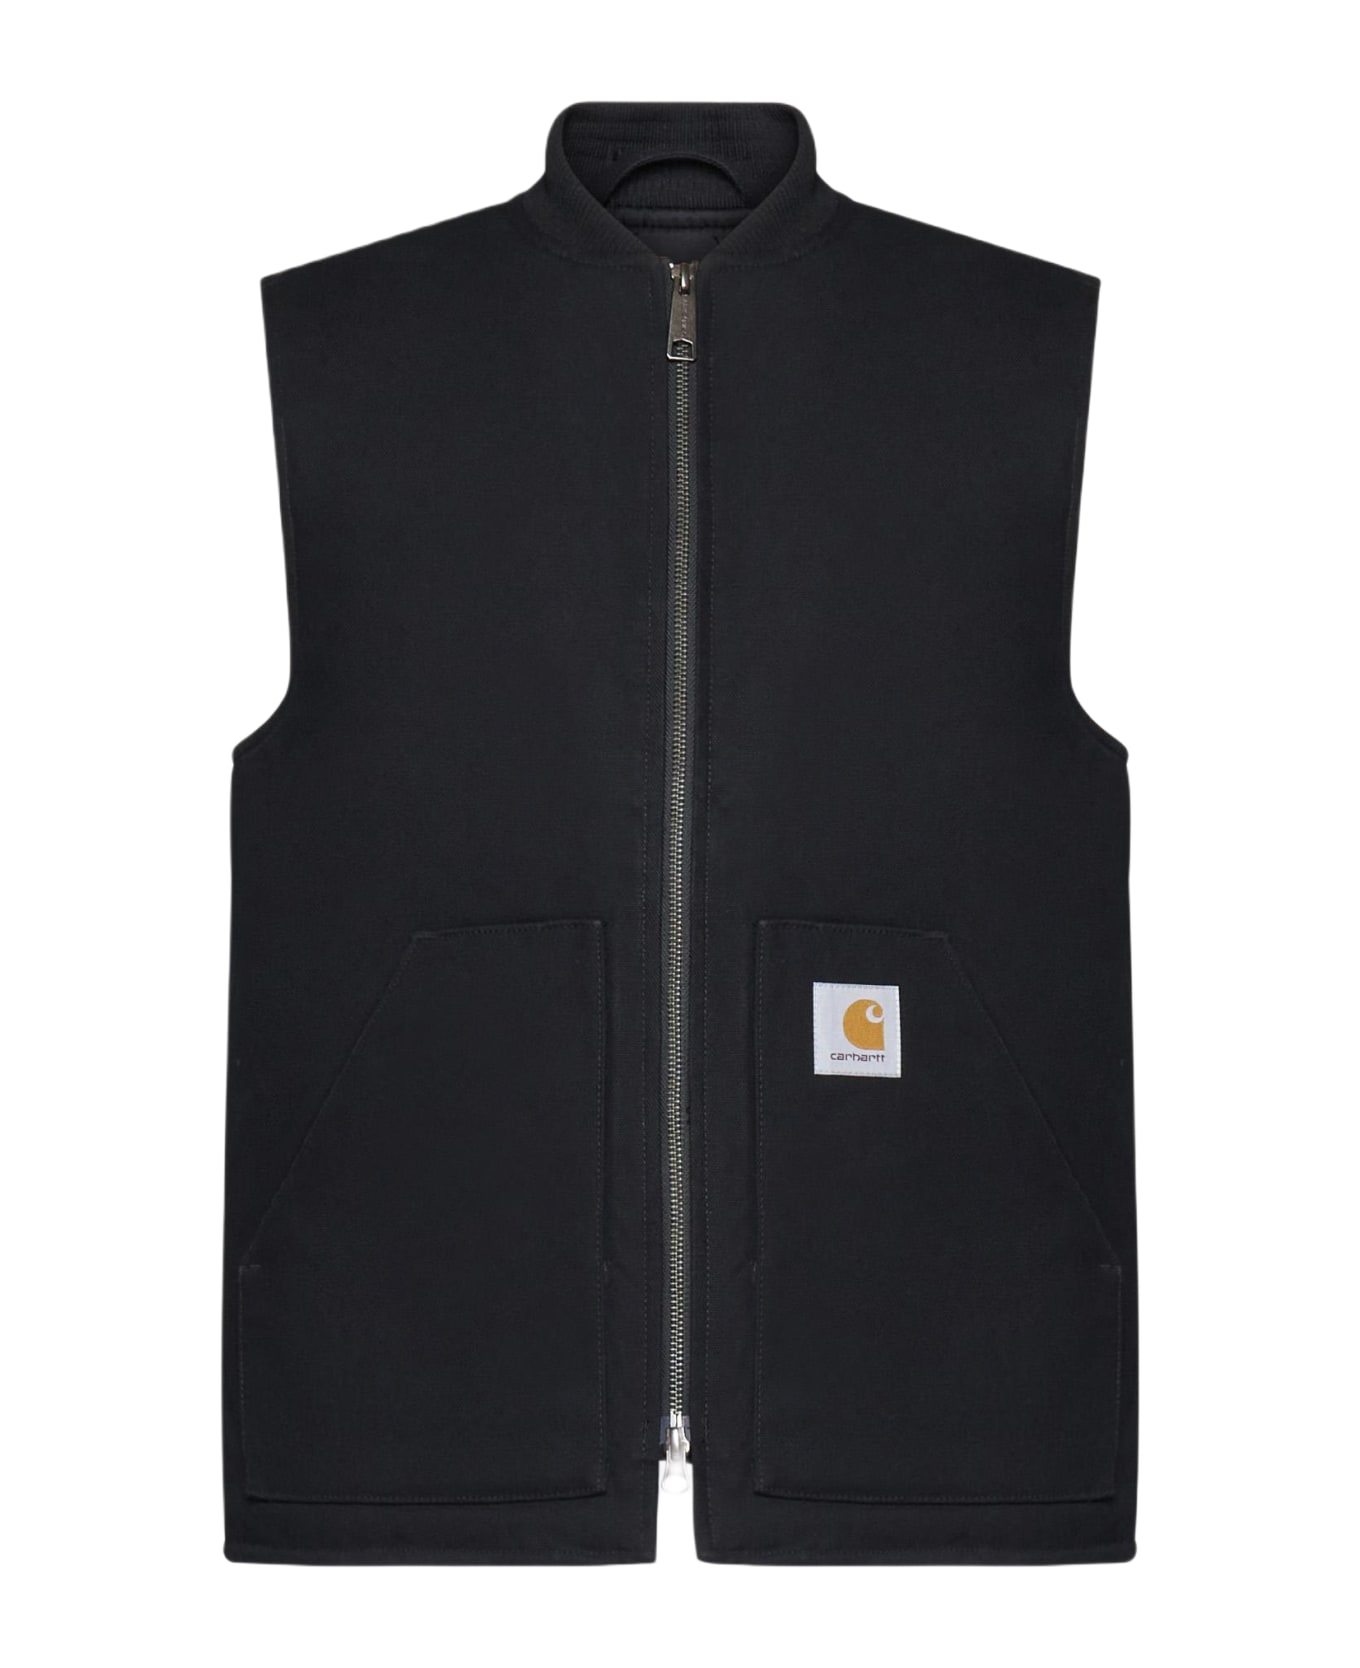 Carhartt Cotton Vest - Black